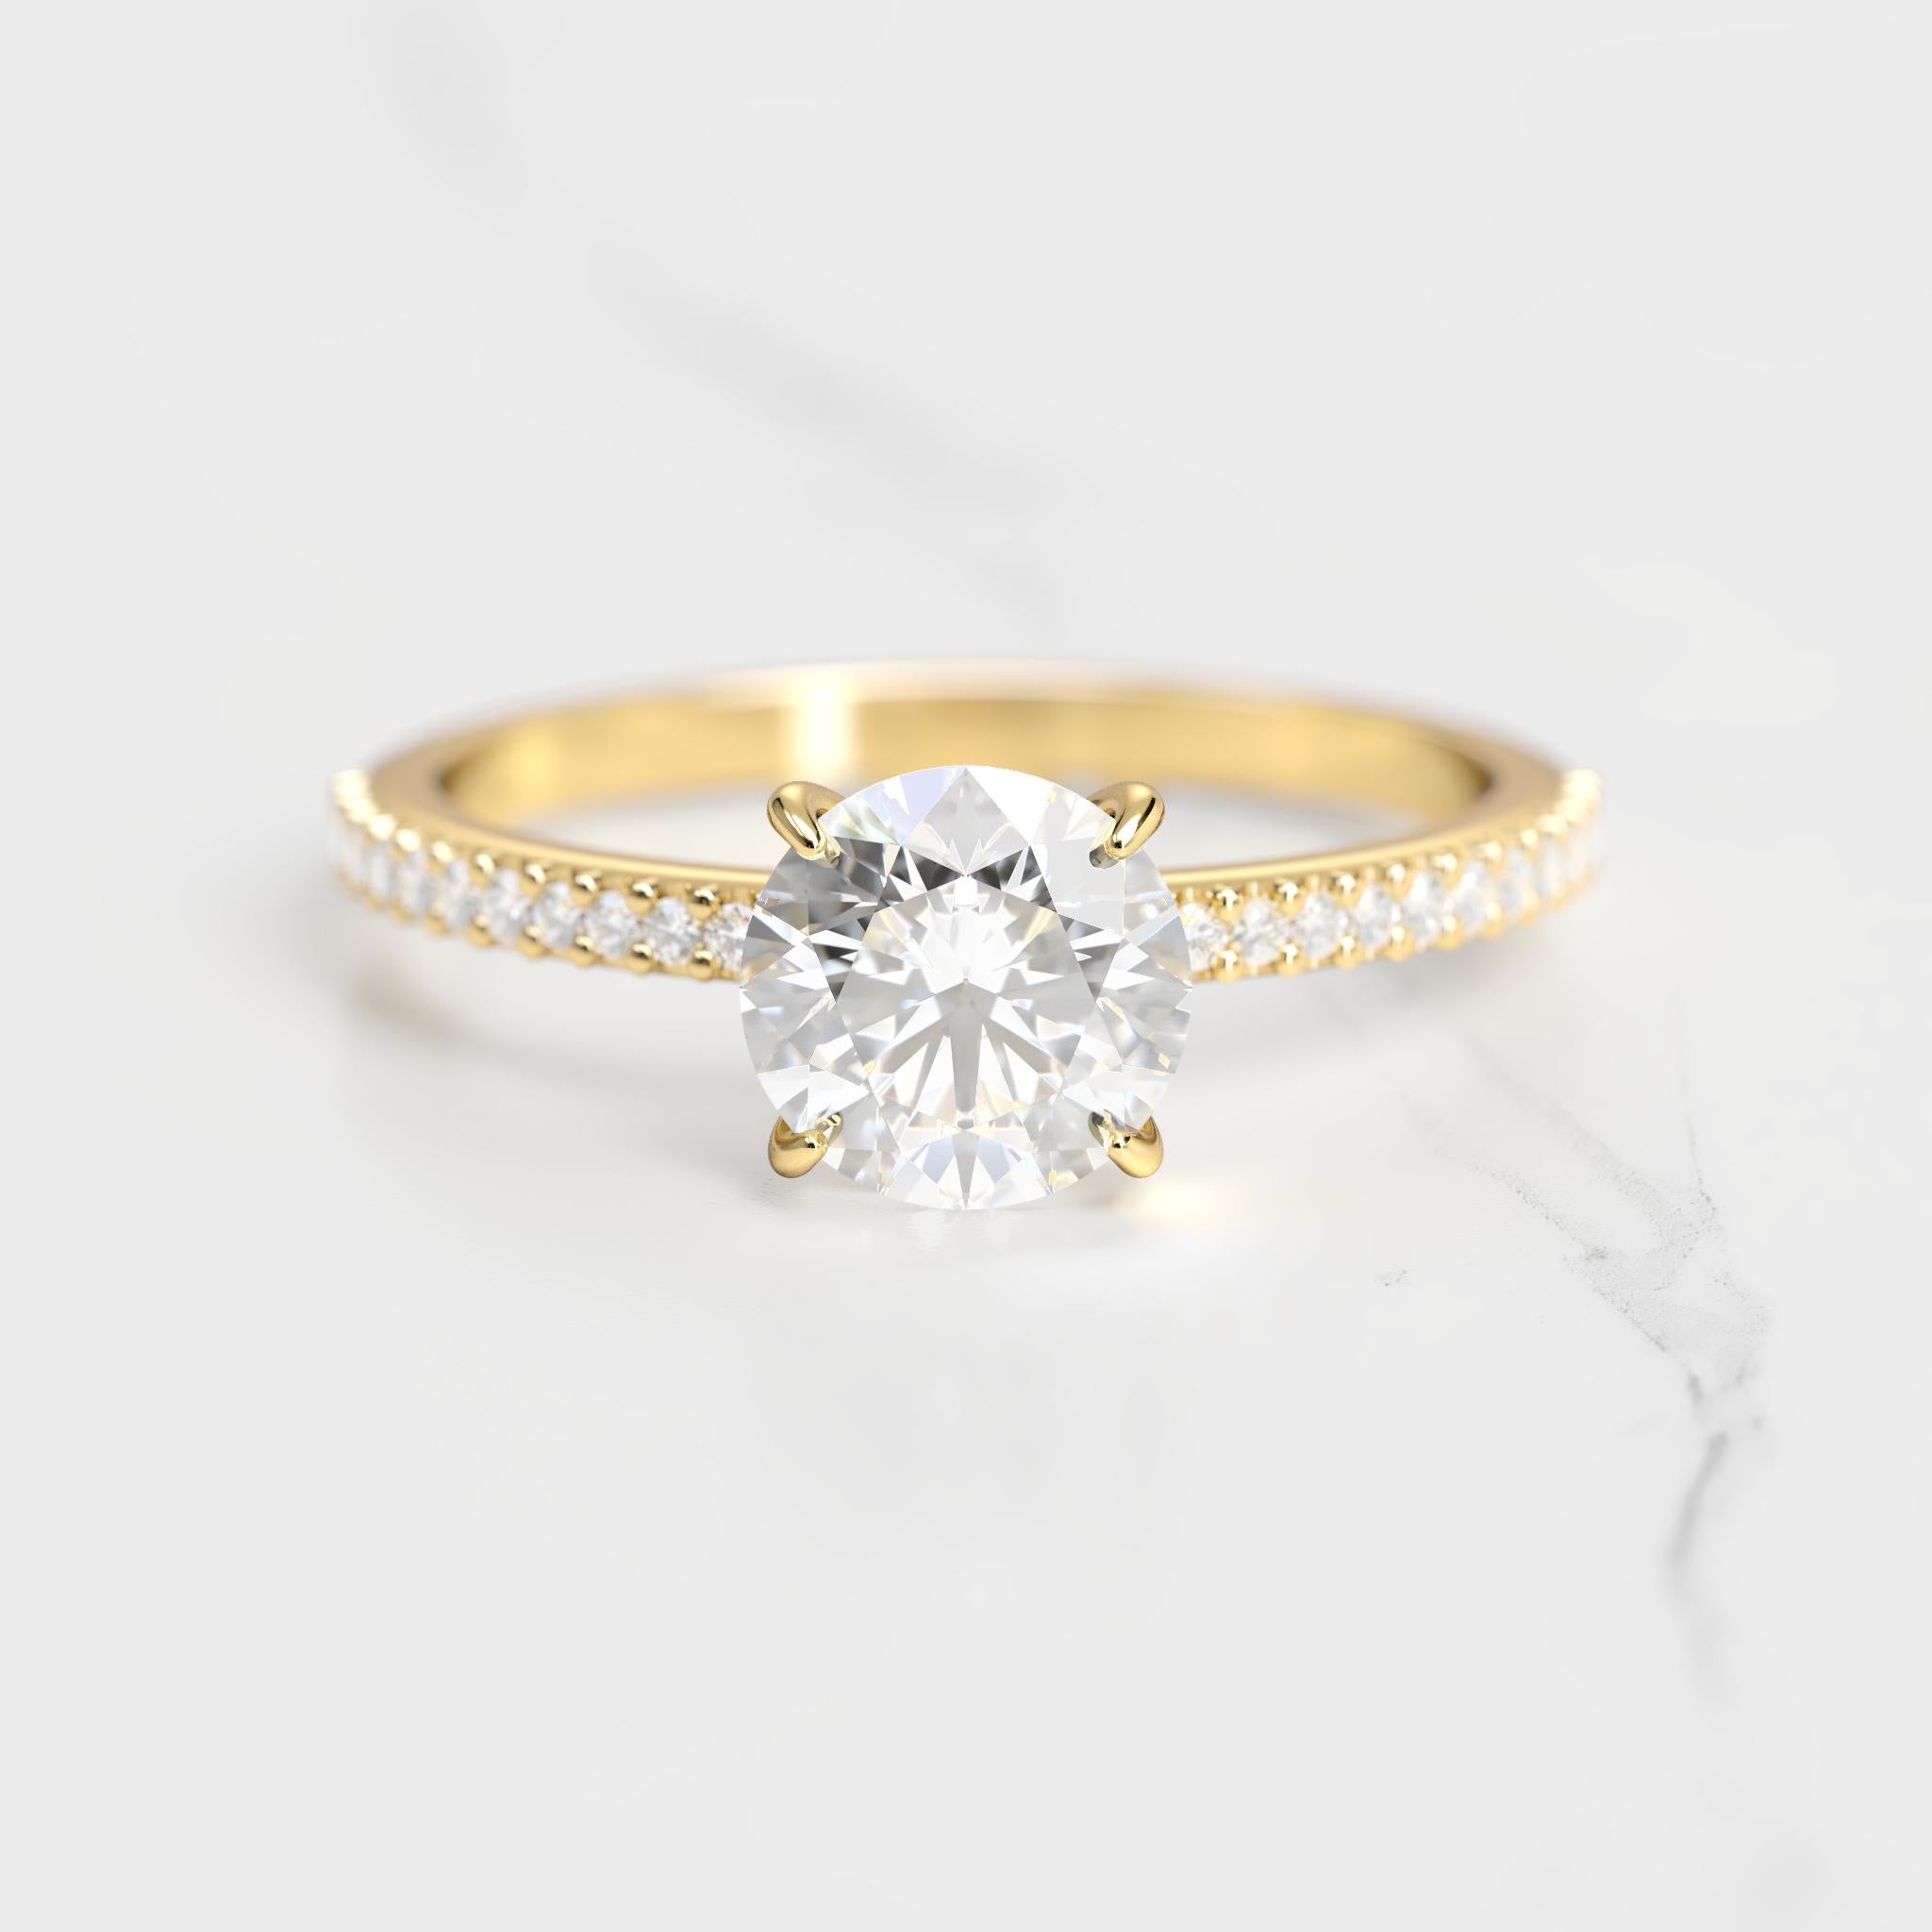 ROUND HALF PAVE DIAMOND RING - 14k white gold / 0.5ct / natural diamond